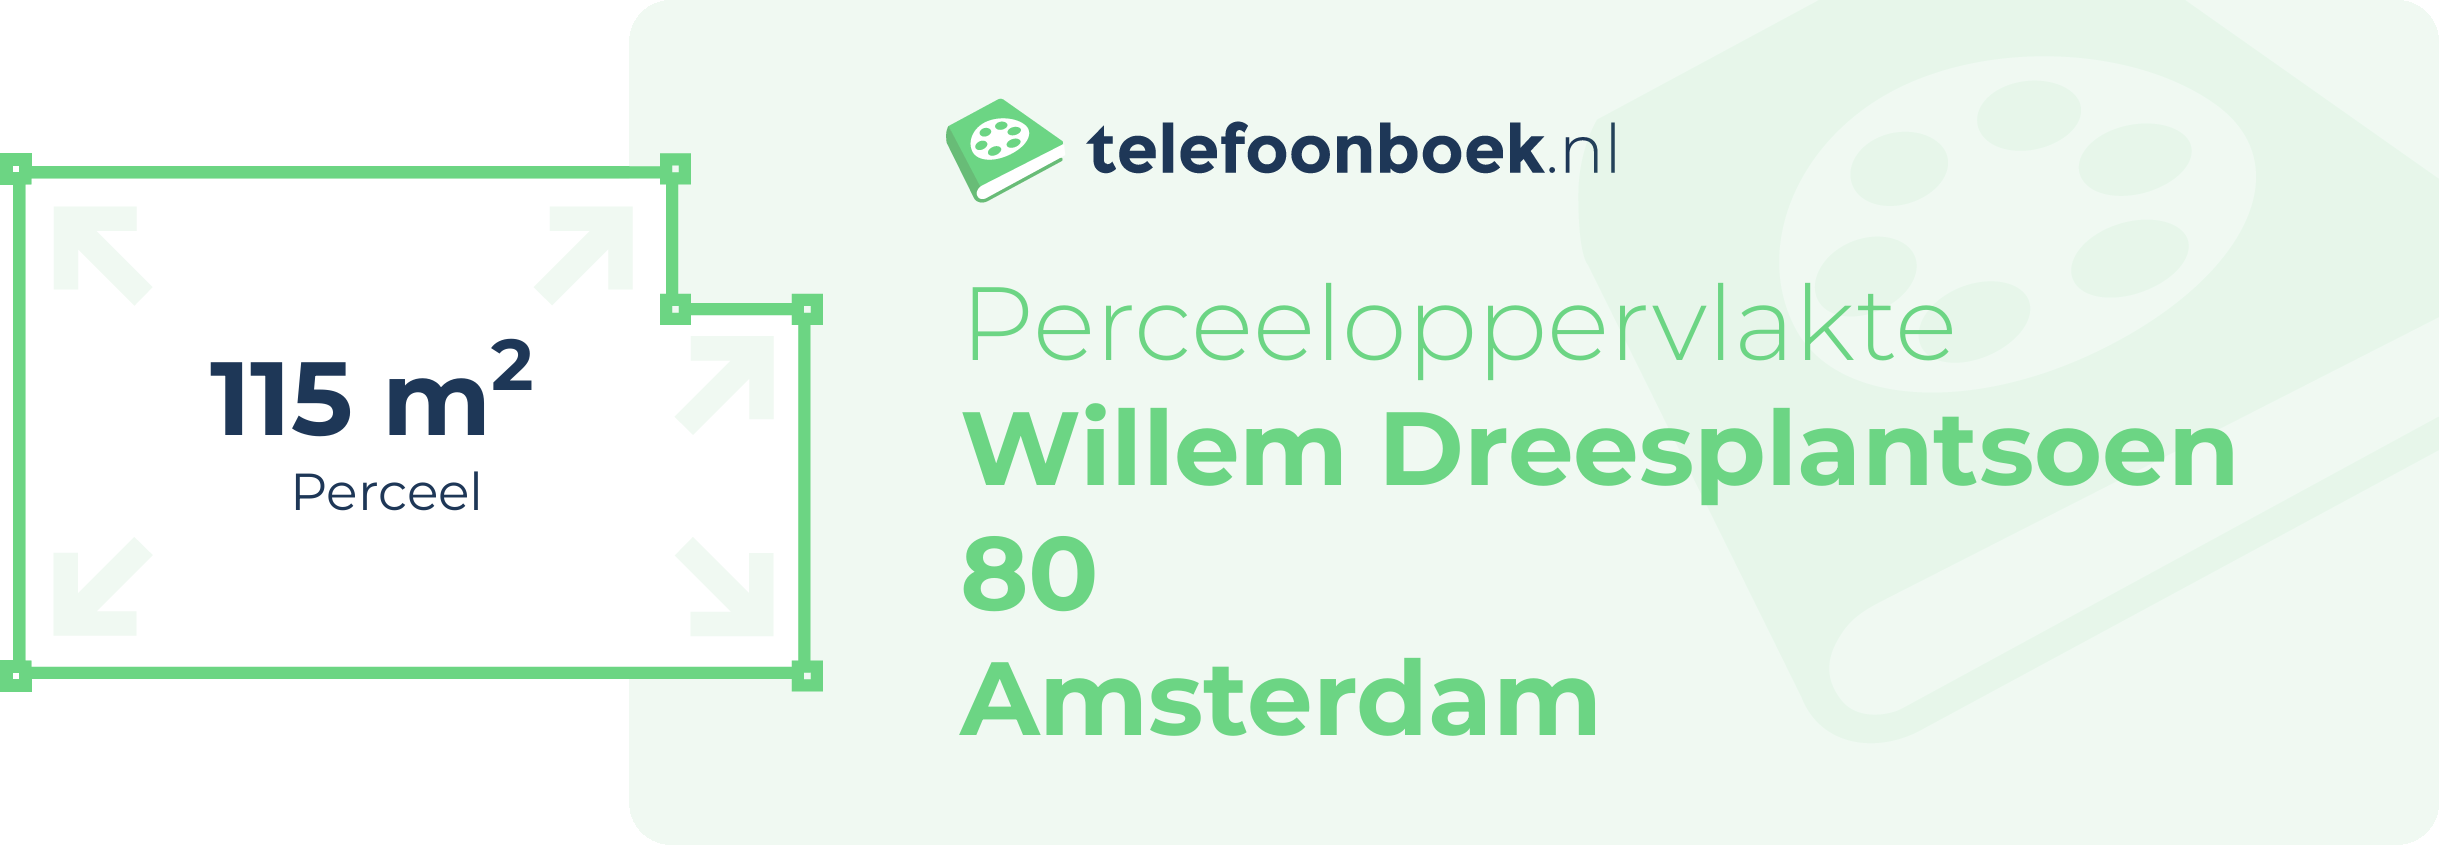 Perceeloppervlakte Willem Dreesplantsoen 80 Amsterdam